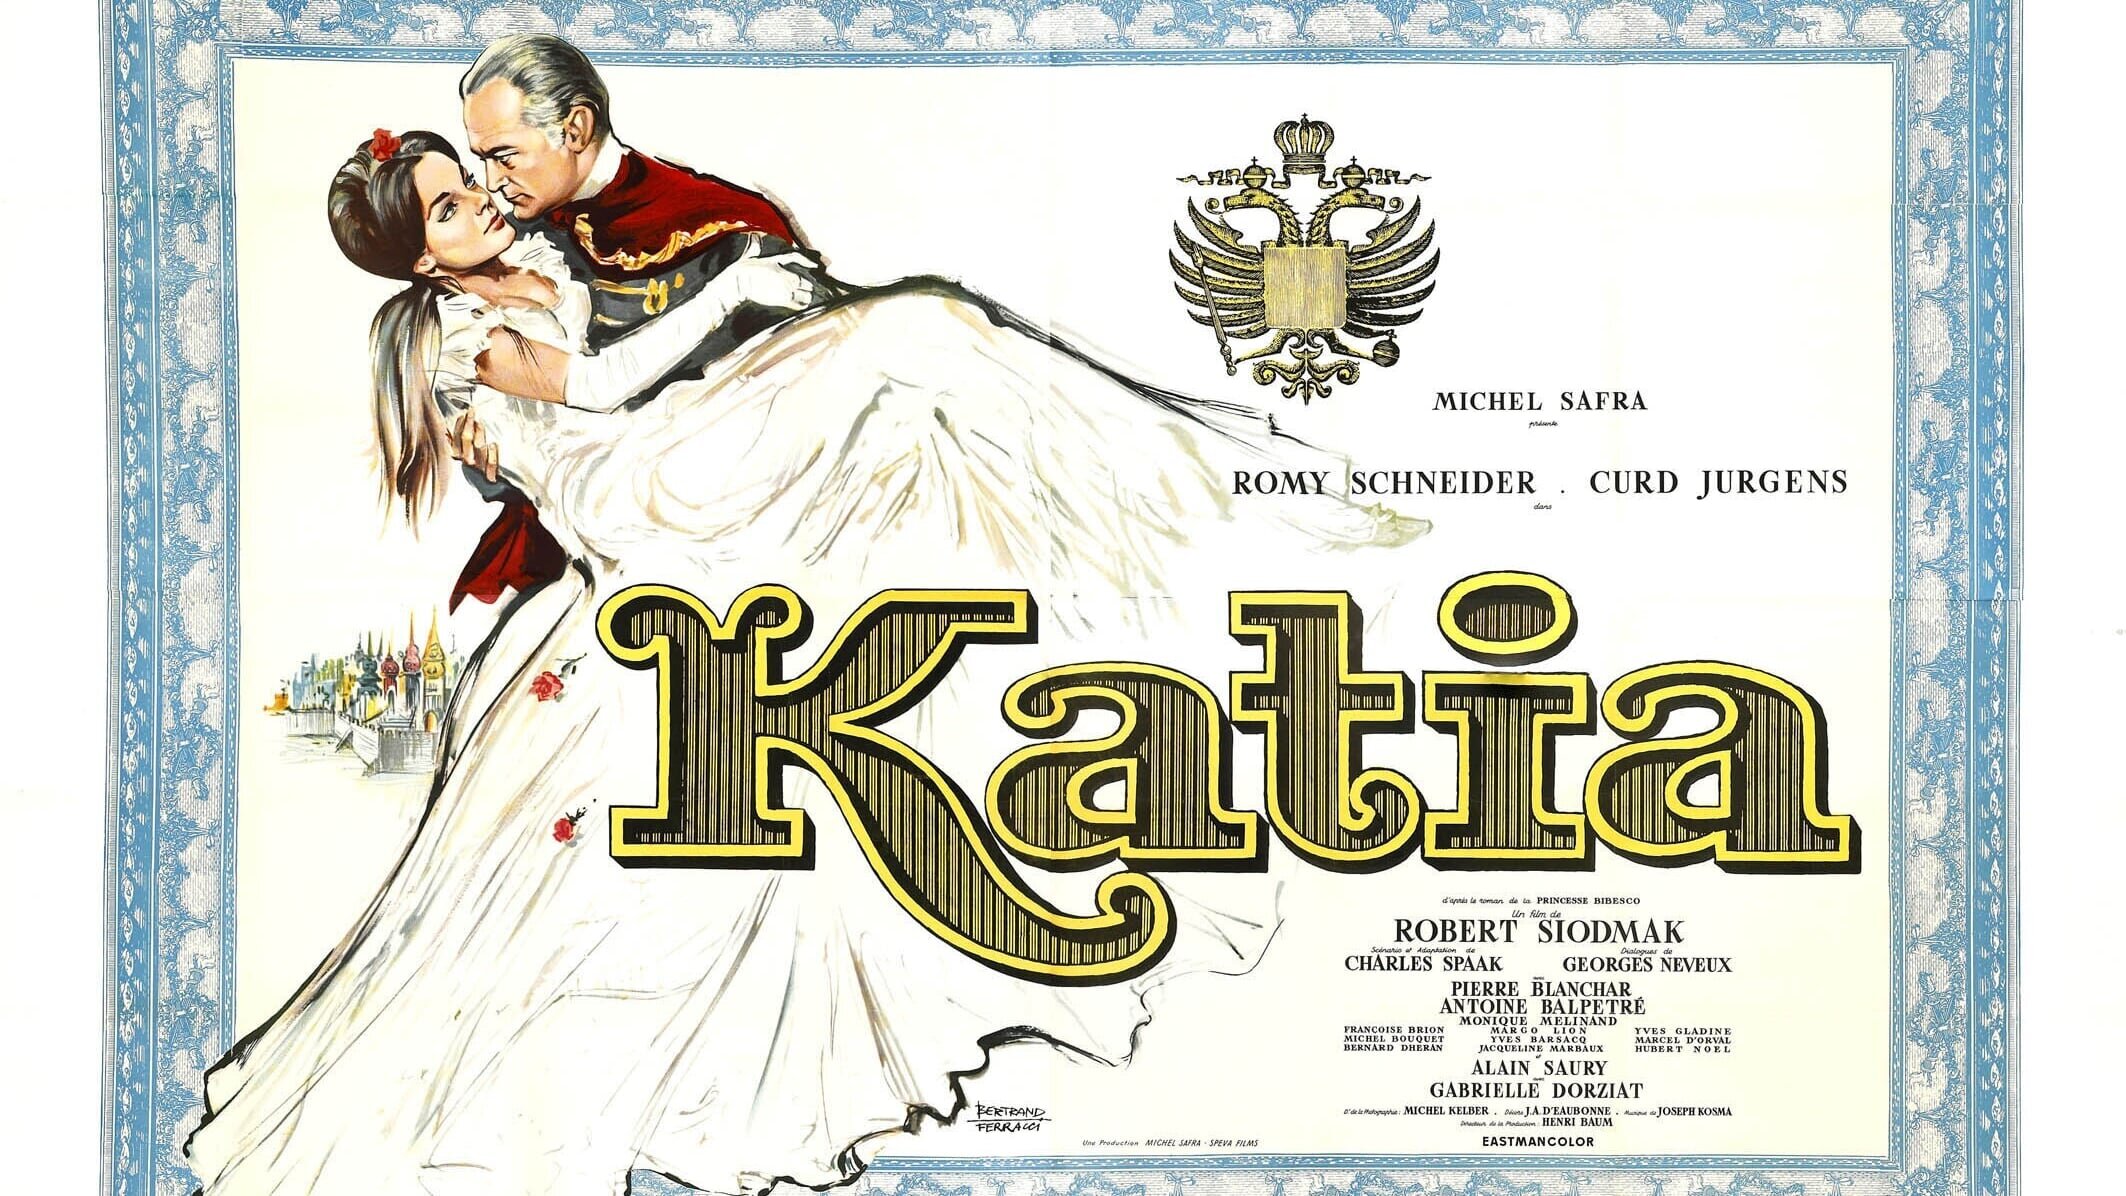 Katja, die ungekrönte Kaiserin